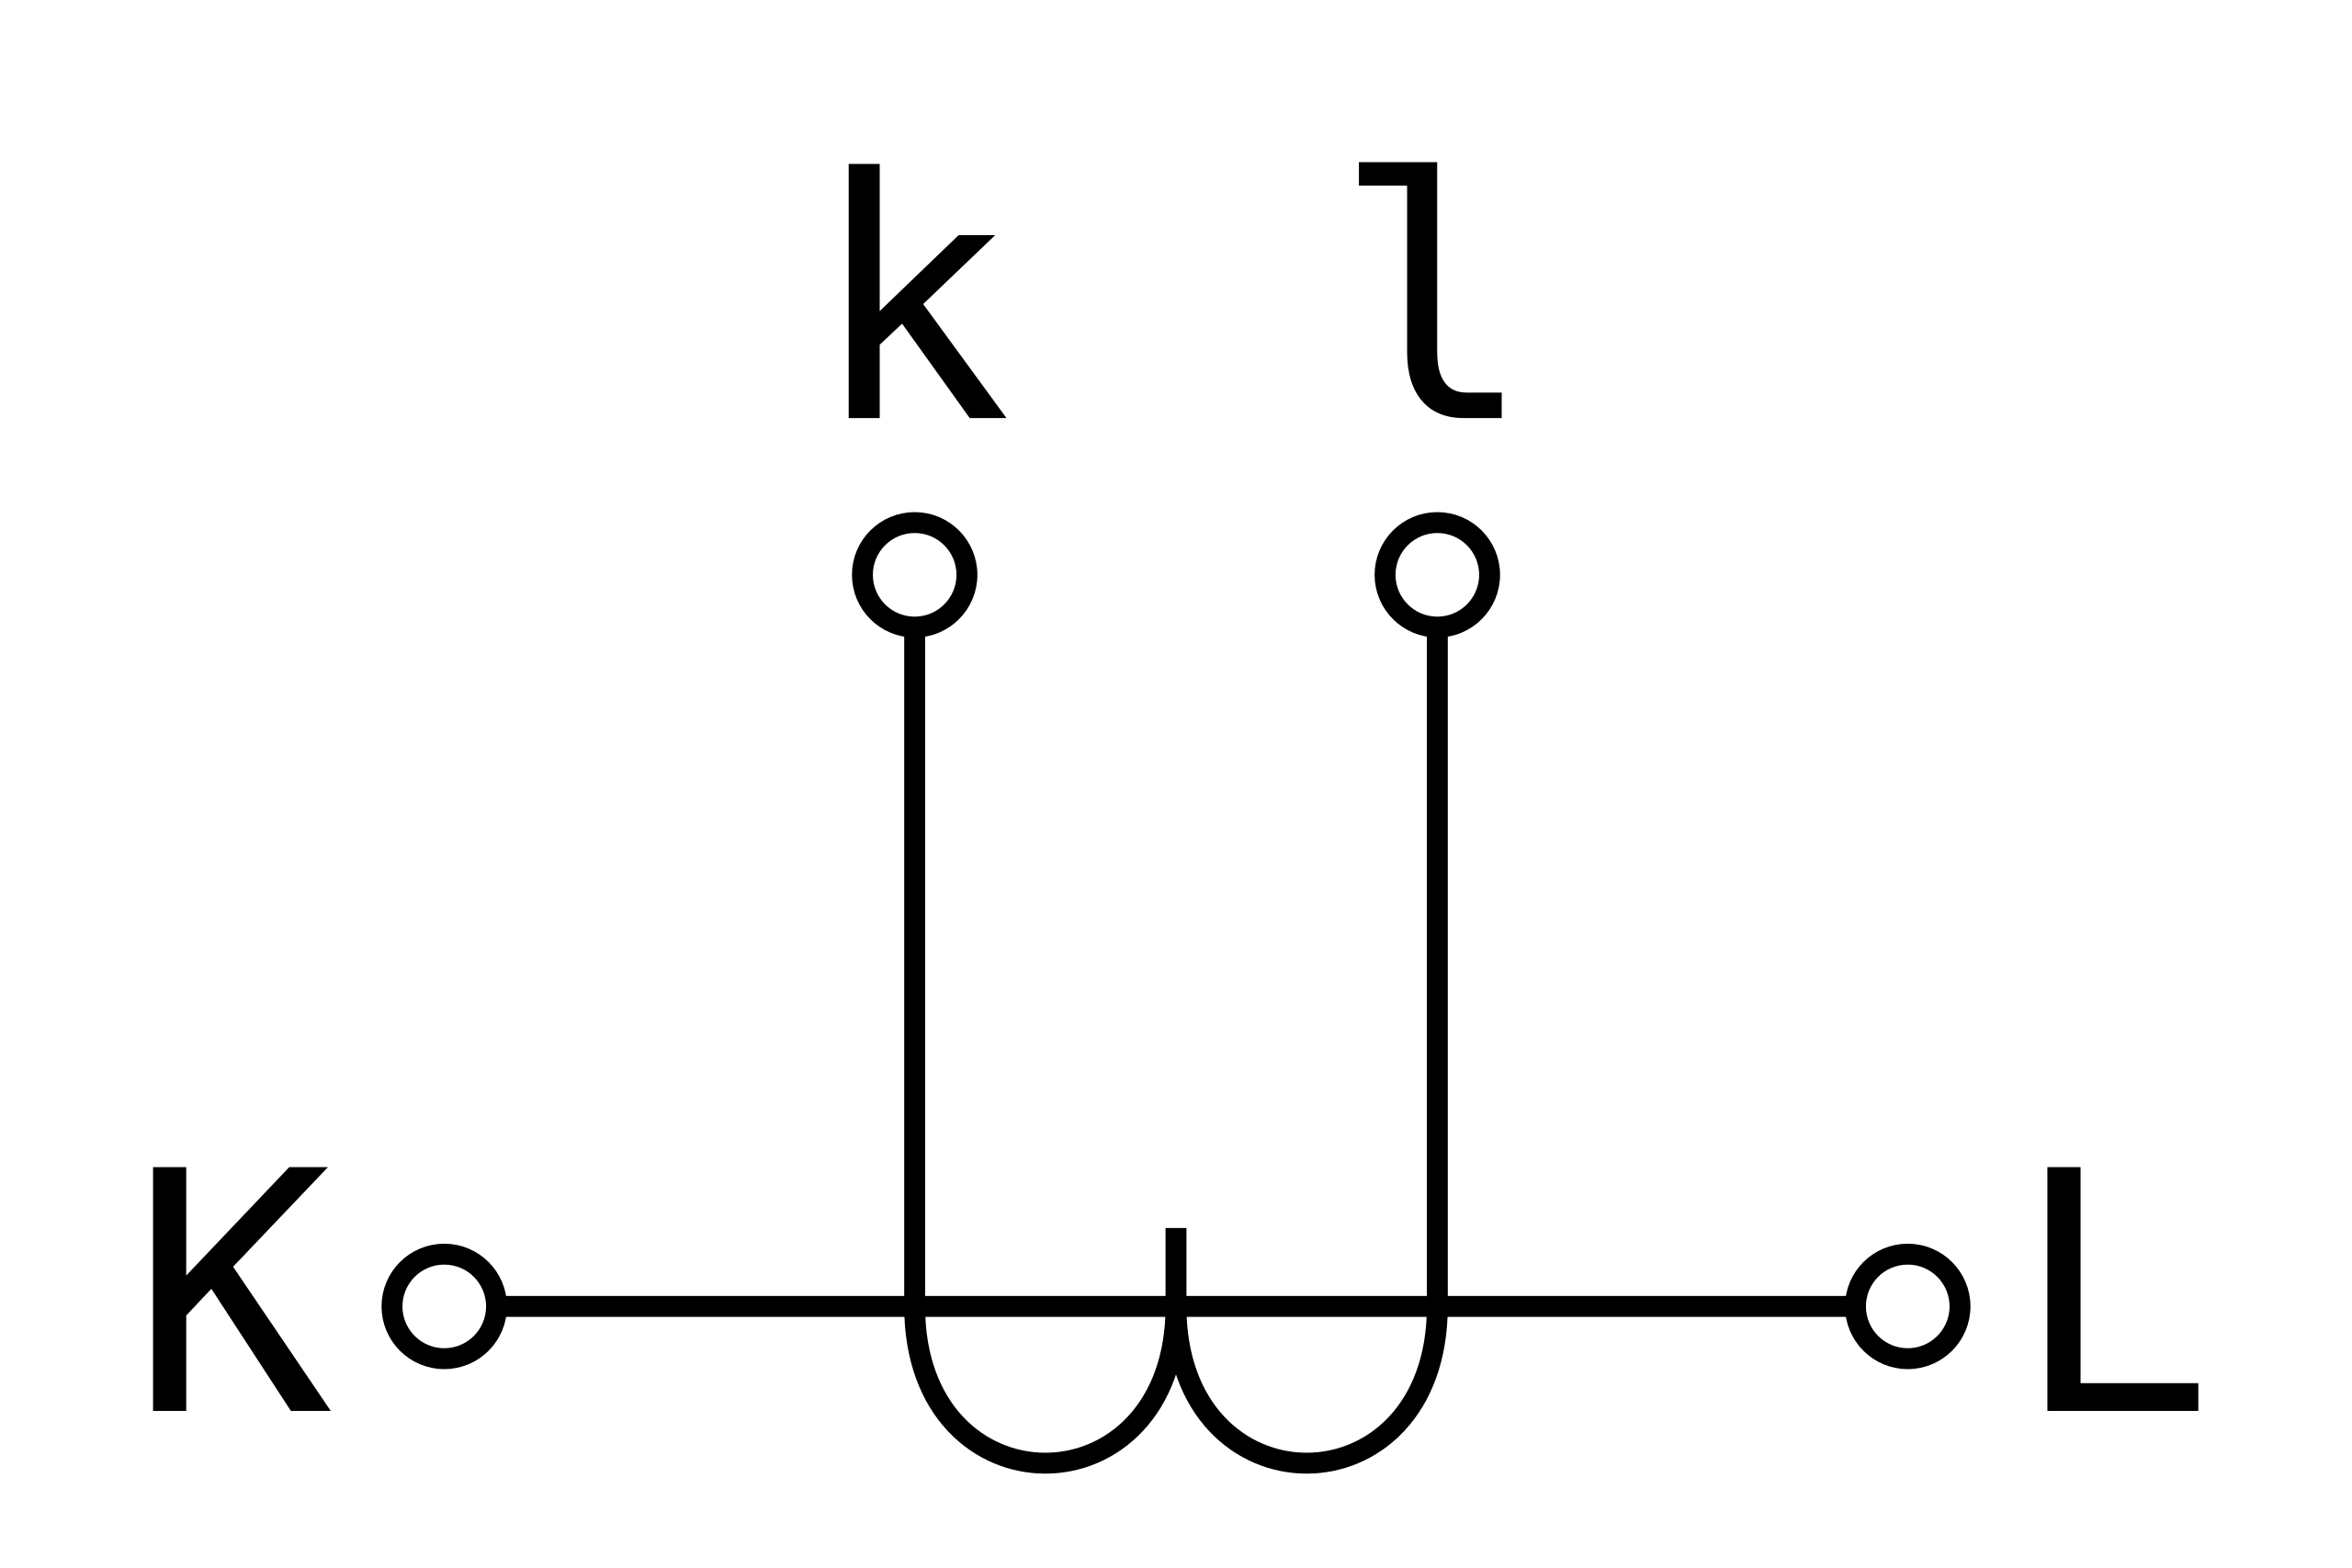 File:Stromwandler symbol.svg - Wikimedia Commons